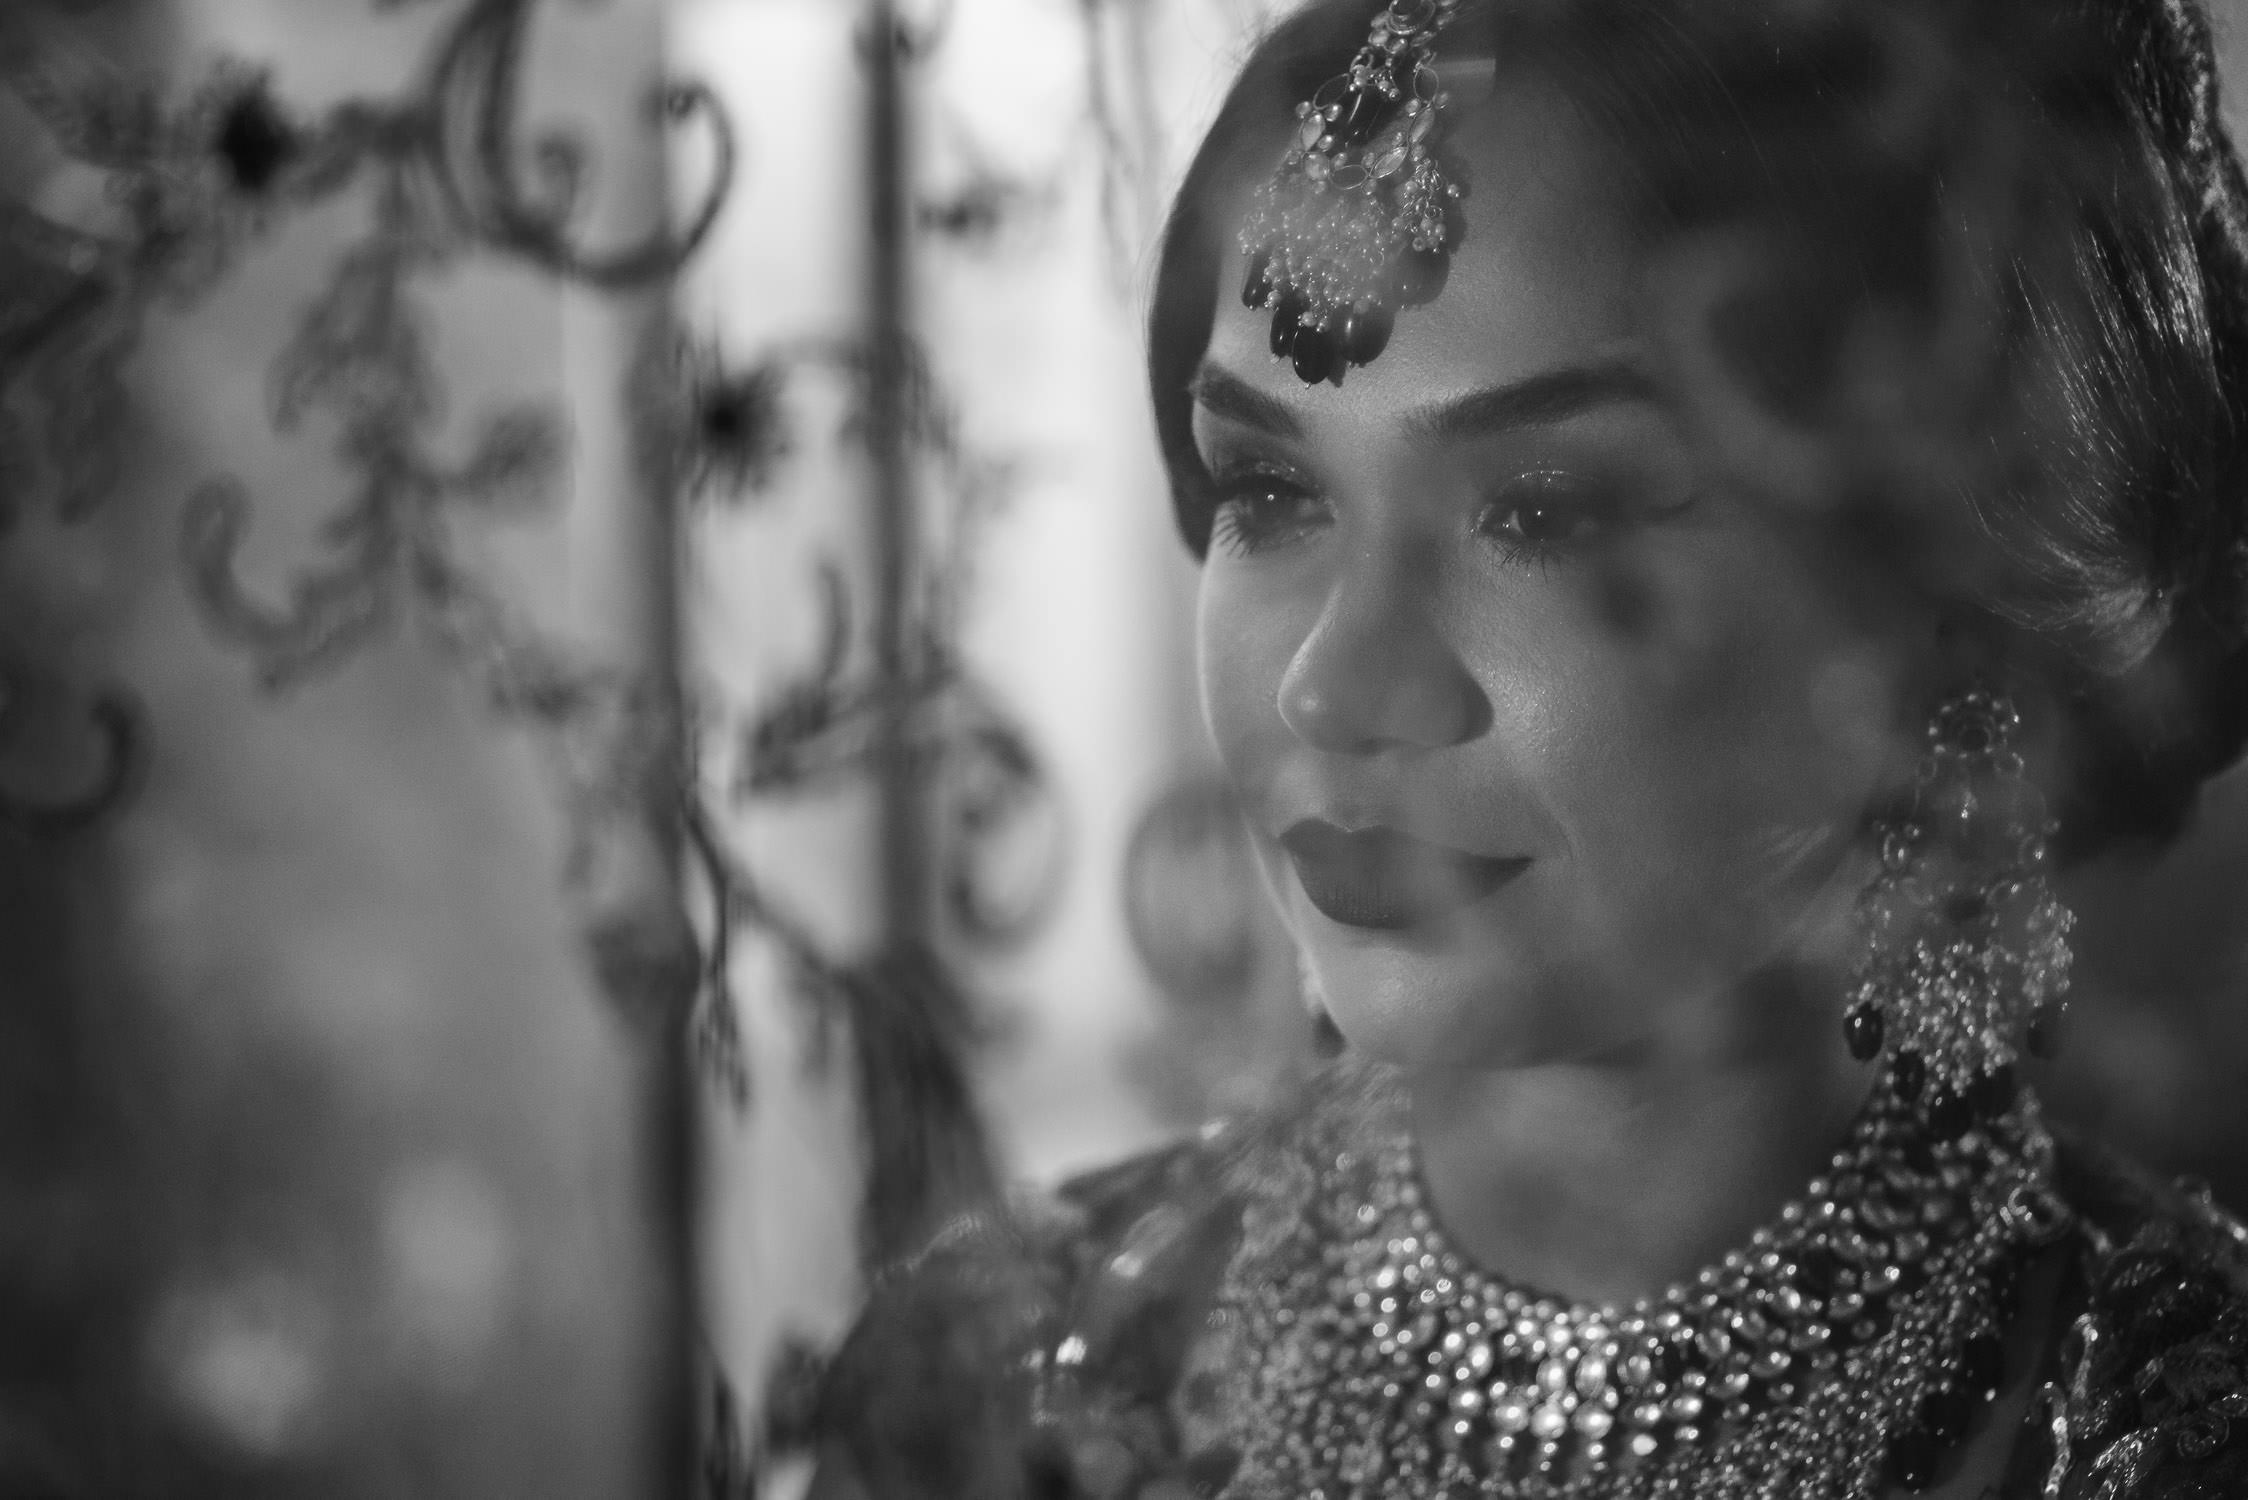 Sikh Wedding Photographer London